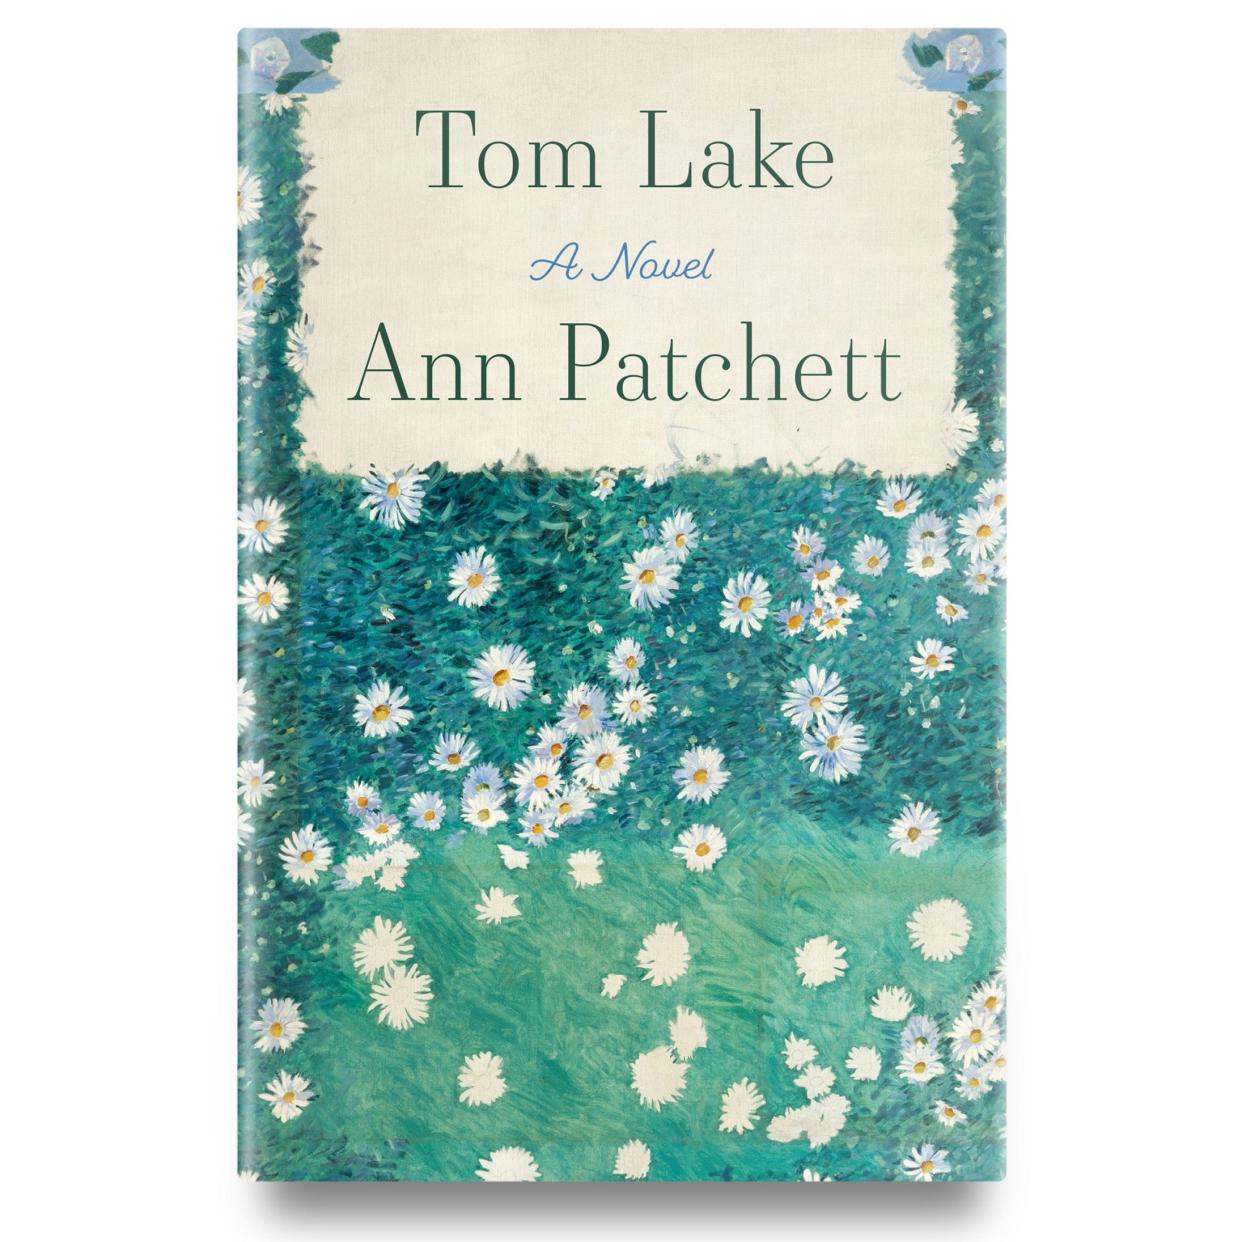 "Tom Lake" by Ann Patchett